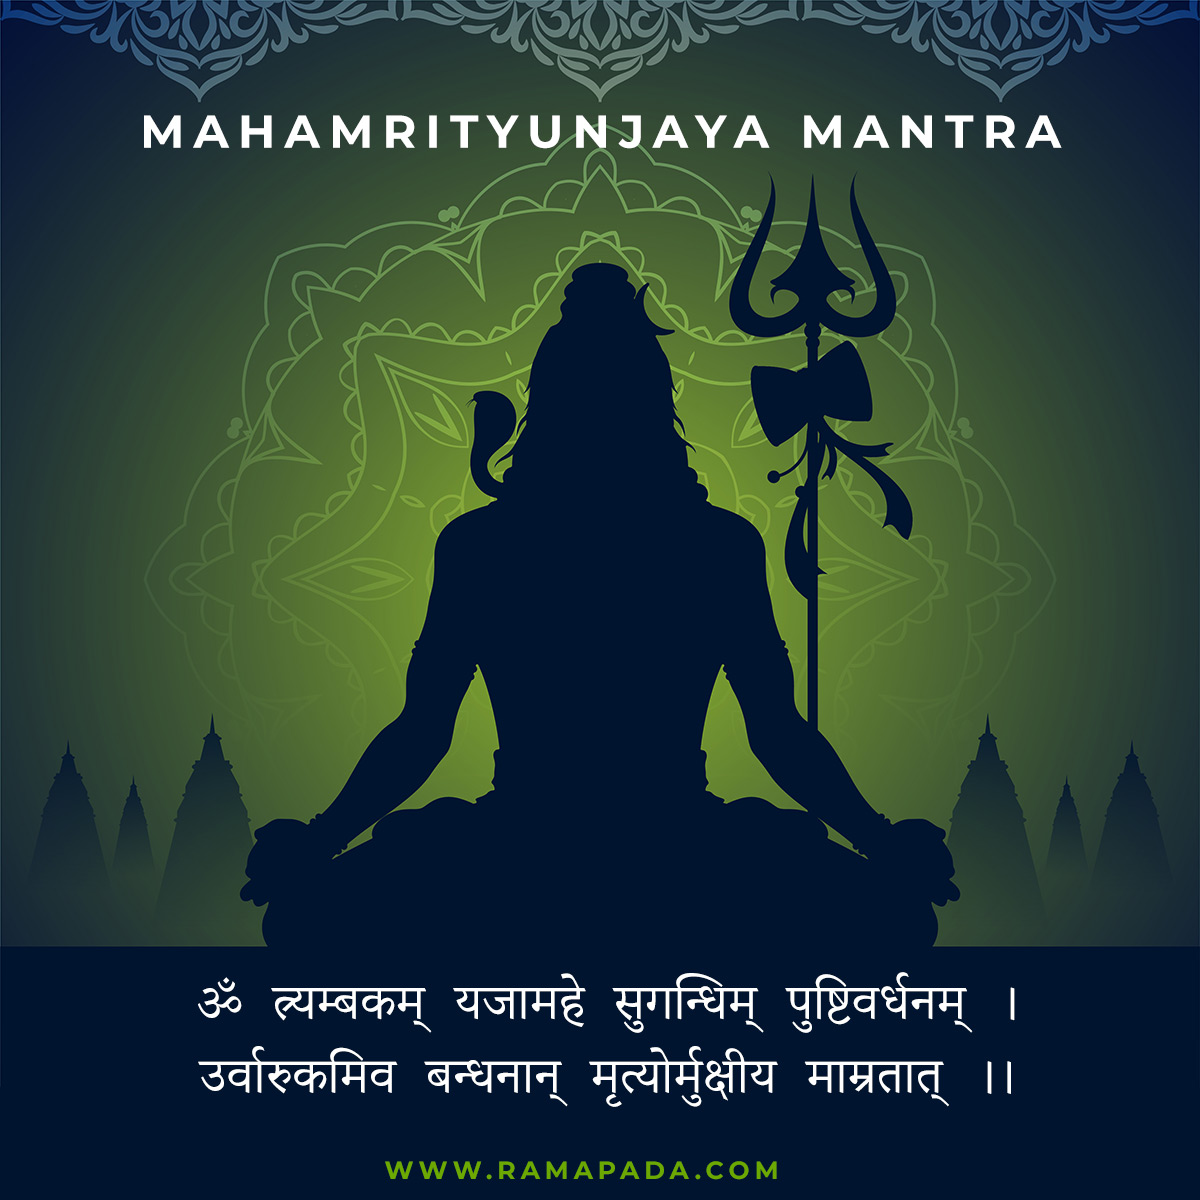 maha mrityunjaya mantra benefits